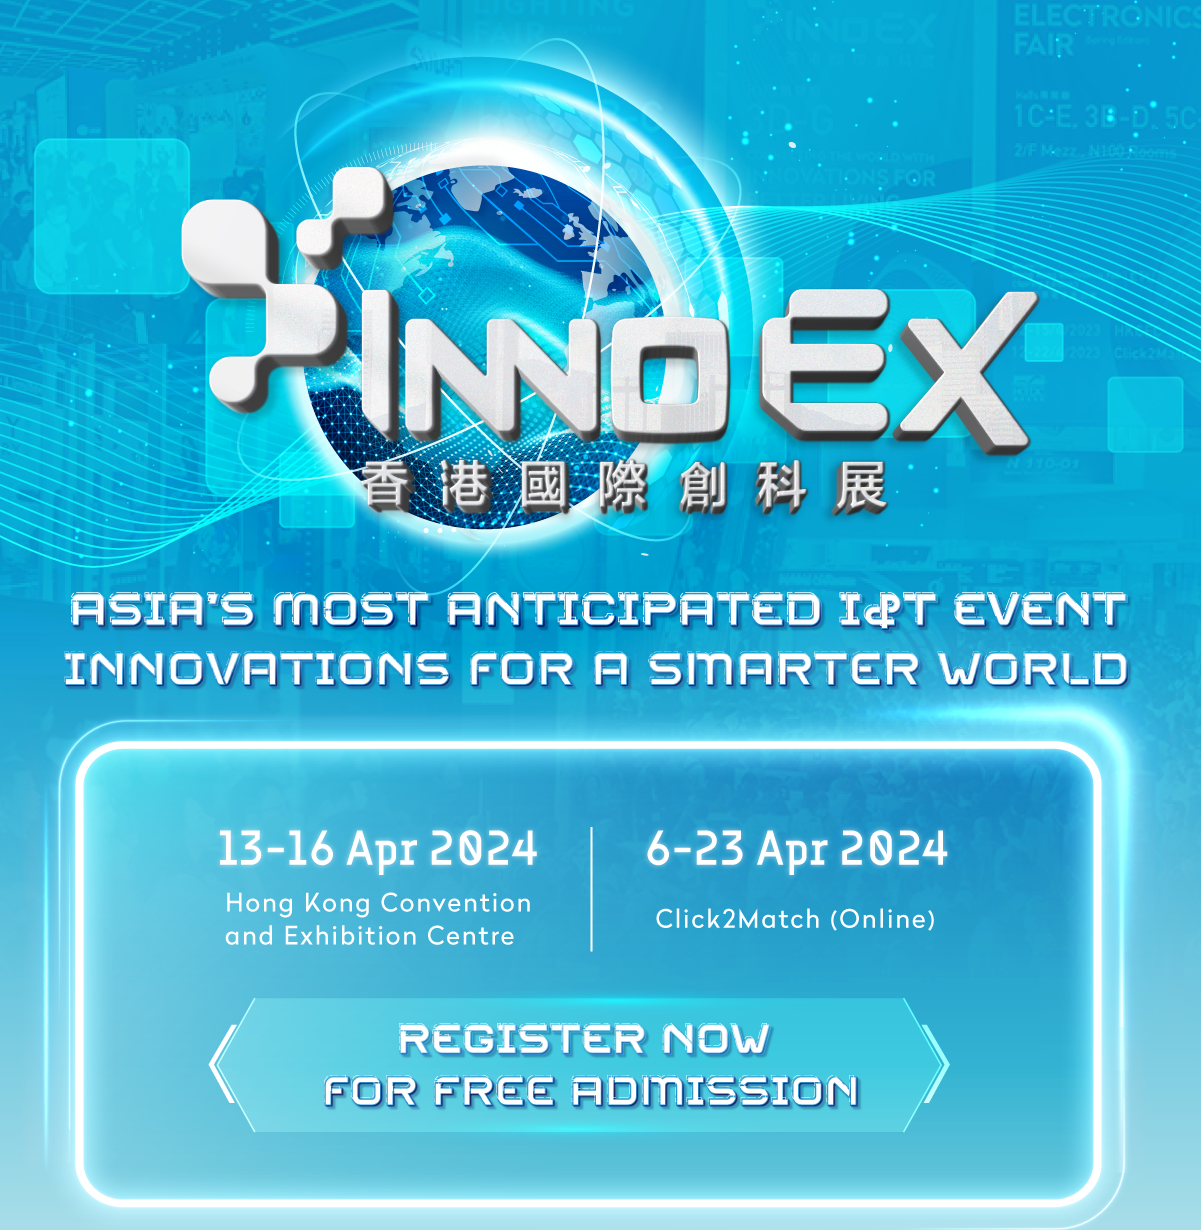 InnoEX 2024: Asia's Most Anticipated I&T Event